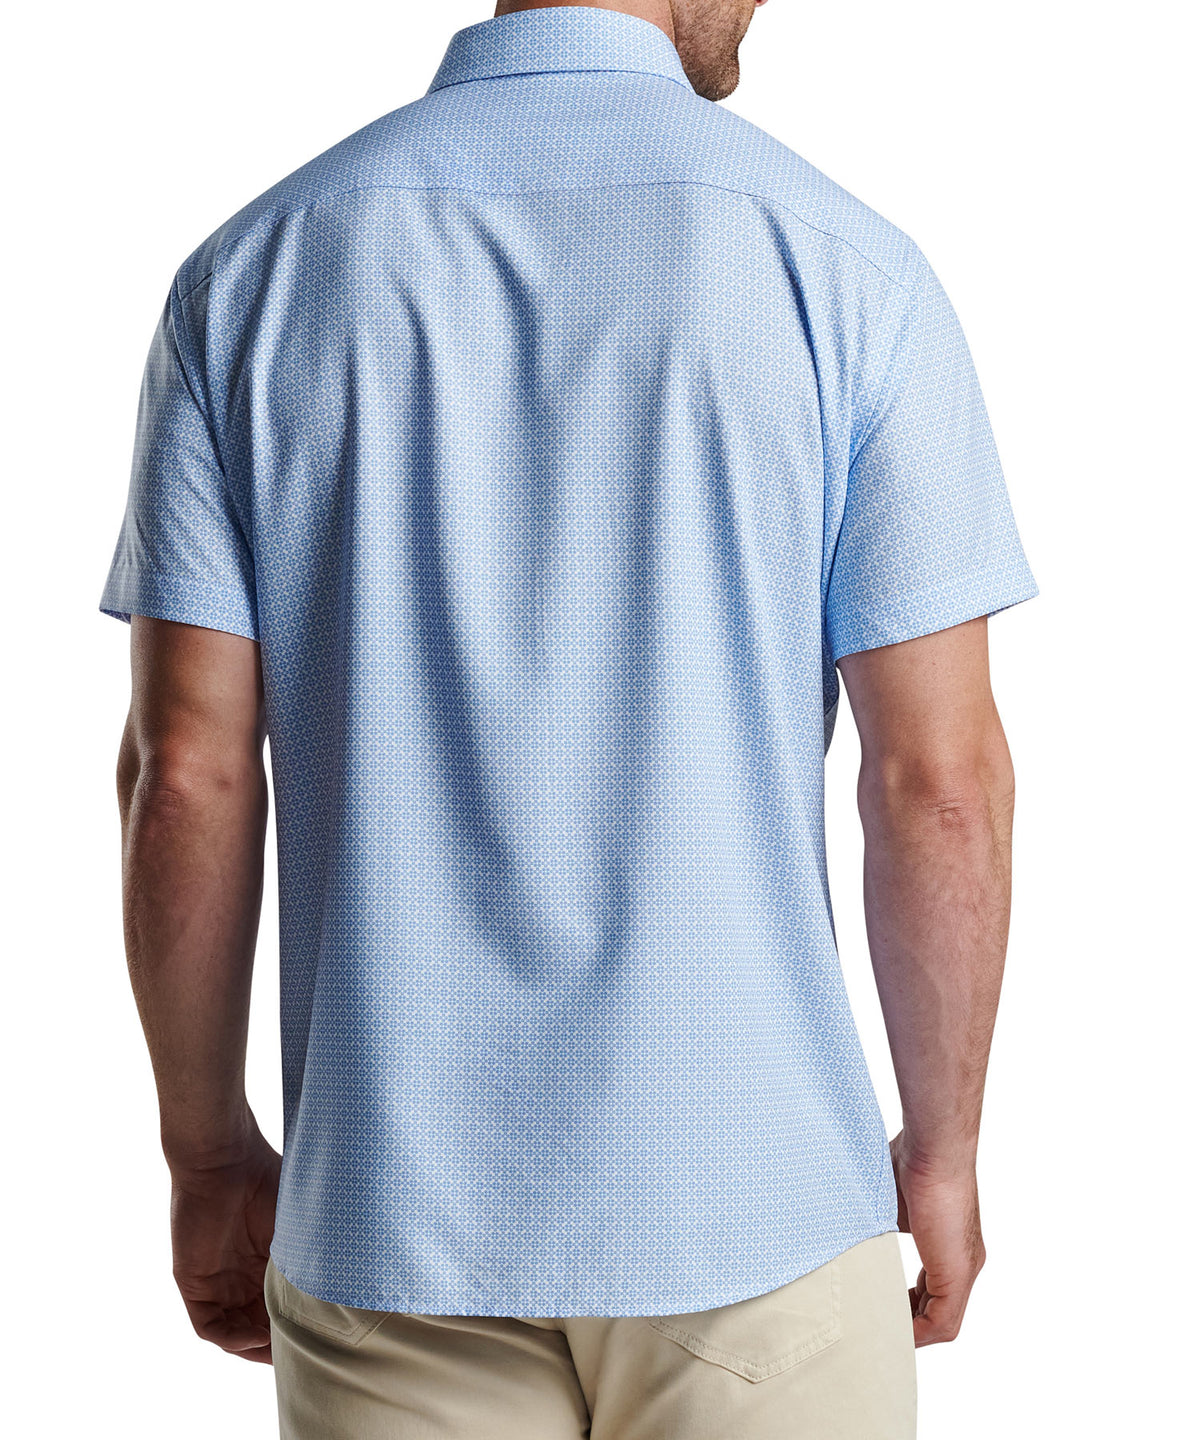 Peter Millar Geo Print Short Sleeve Spread Collar Sport Shirt, Big & Tall